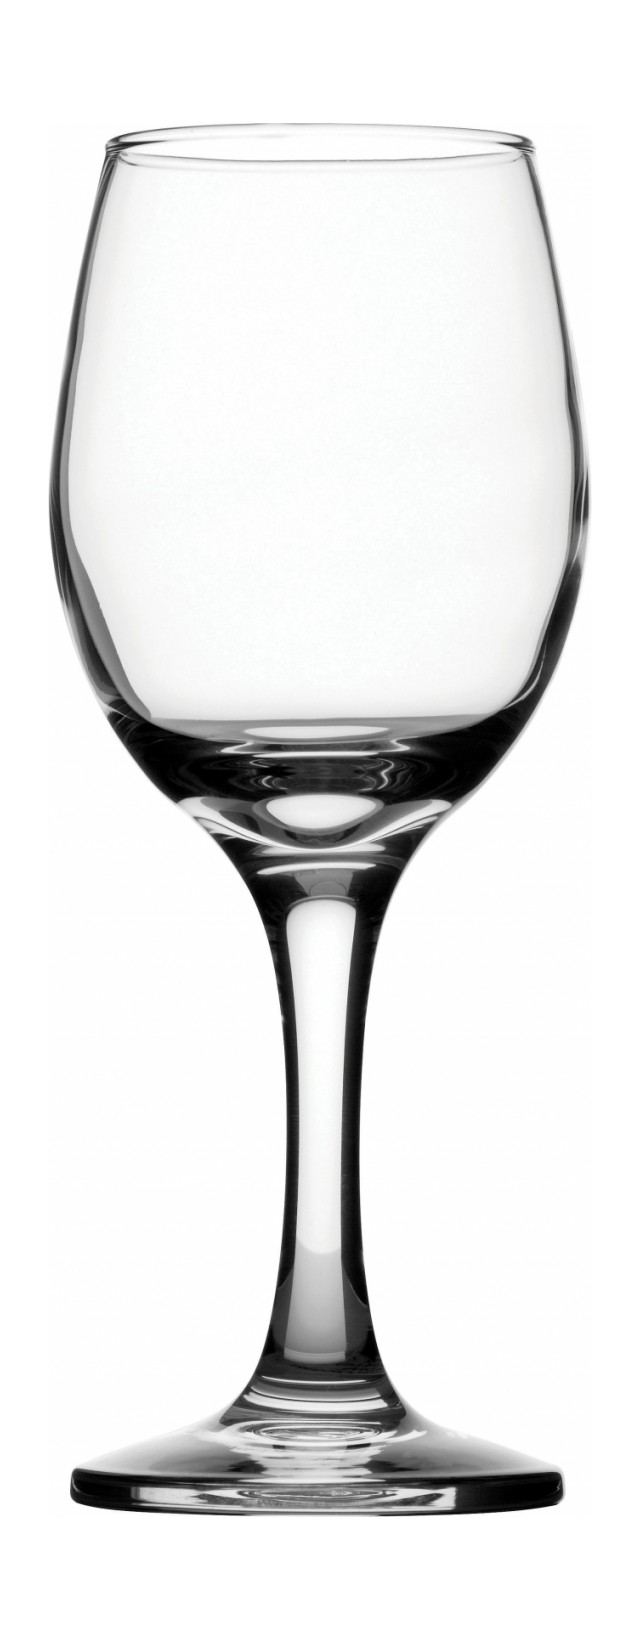 clipart wine glass free - photo #33